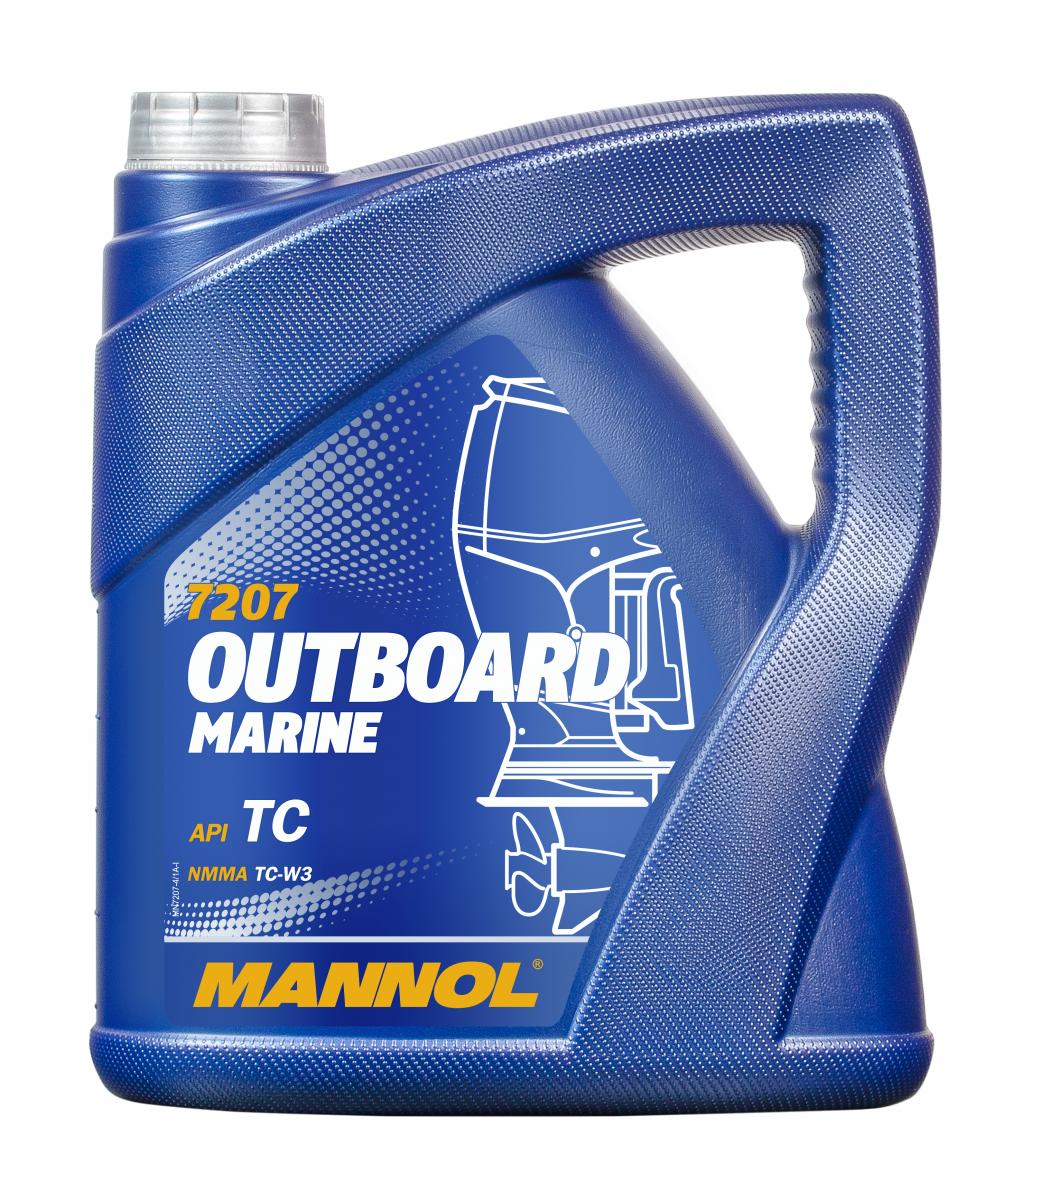 16 Liter (4x4) MANNOL Outboard Marine API TC Motoröl Außenbordmotoröl